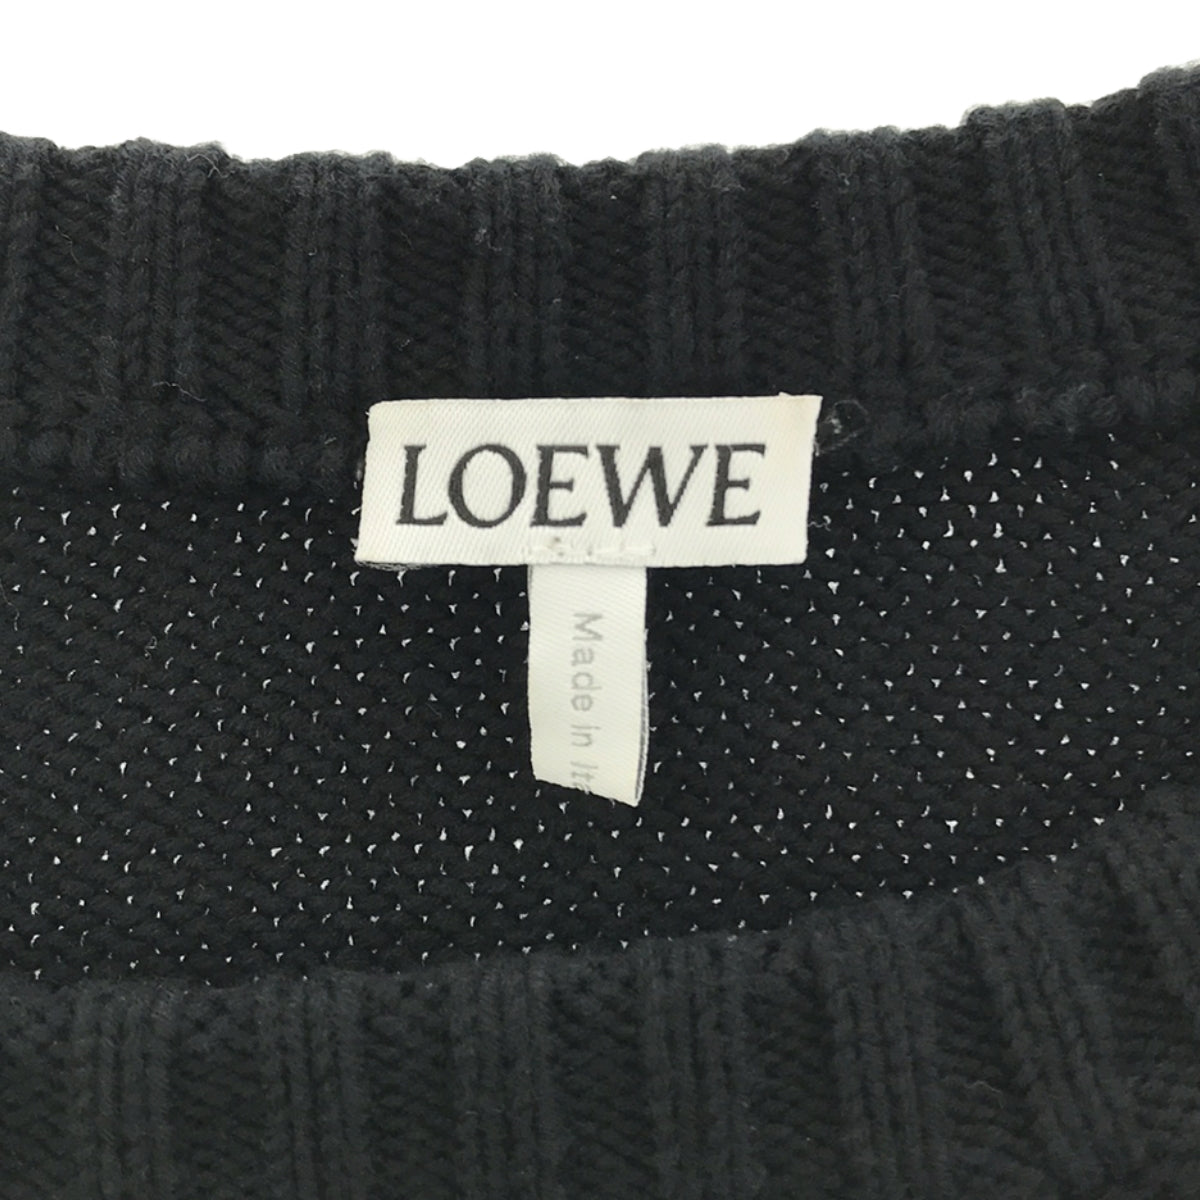 LOEWE / ロエベ | コットン ロゴ ステッチ 刺しゅう オーバーサイズ クルーネックニット | XS | ブラック | メンズ